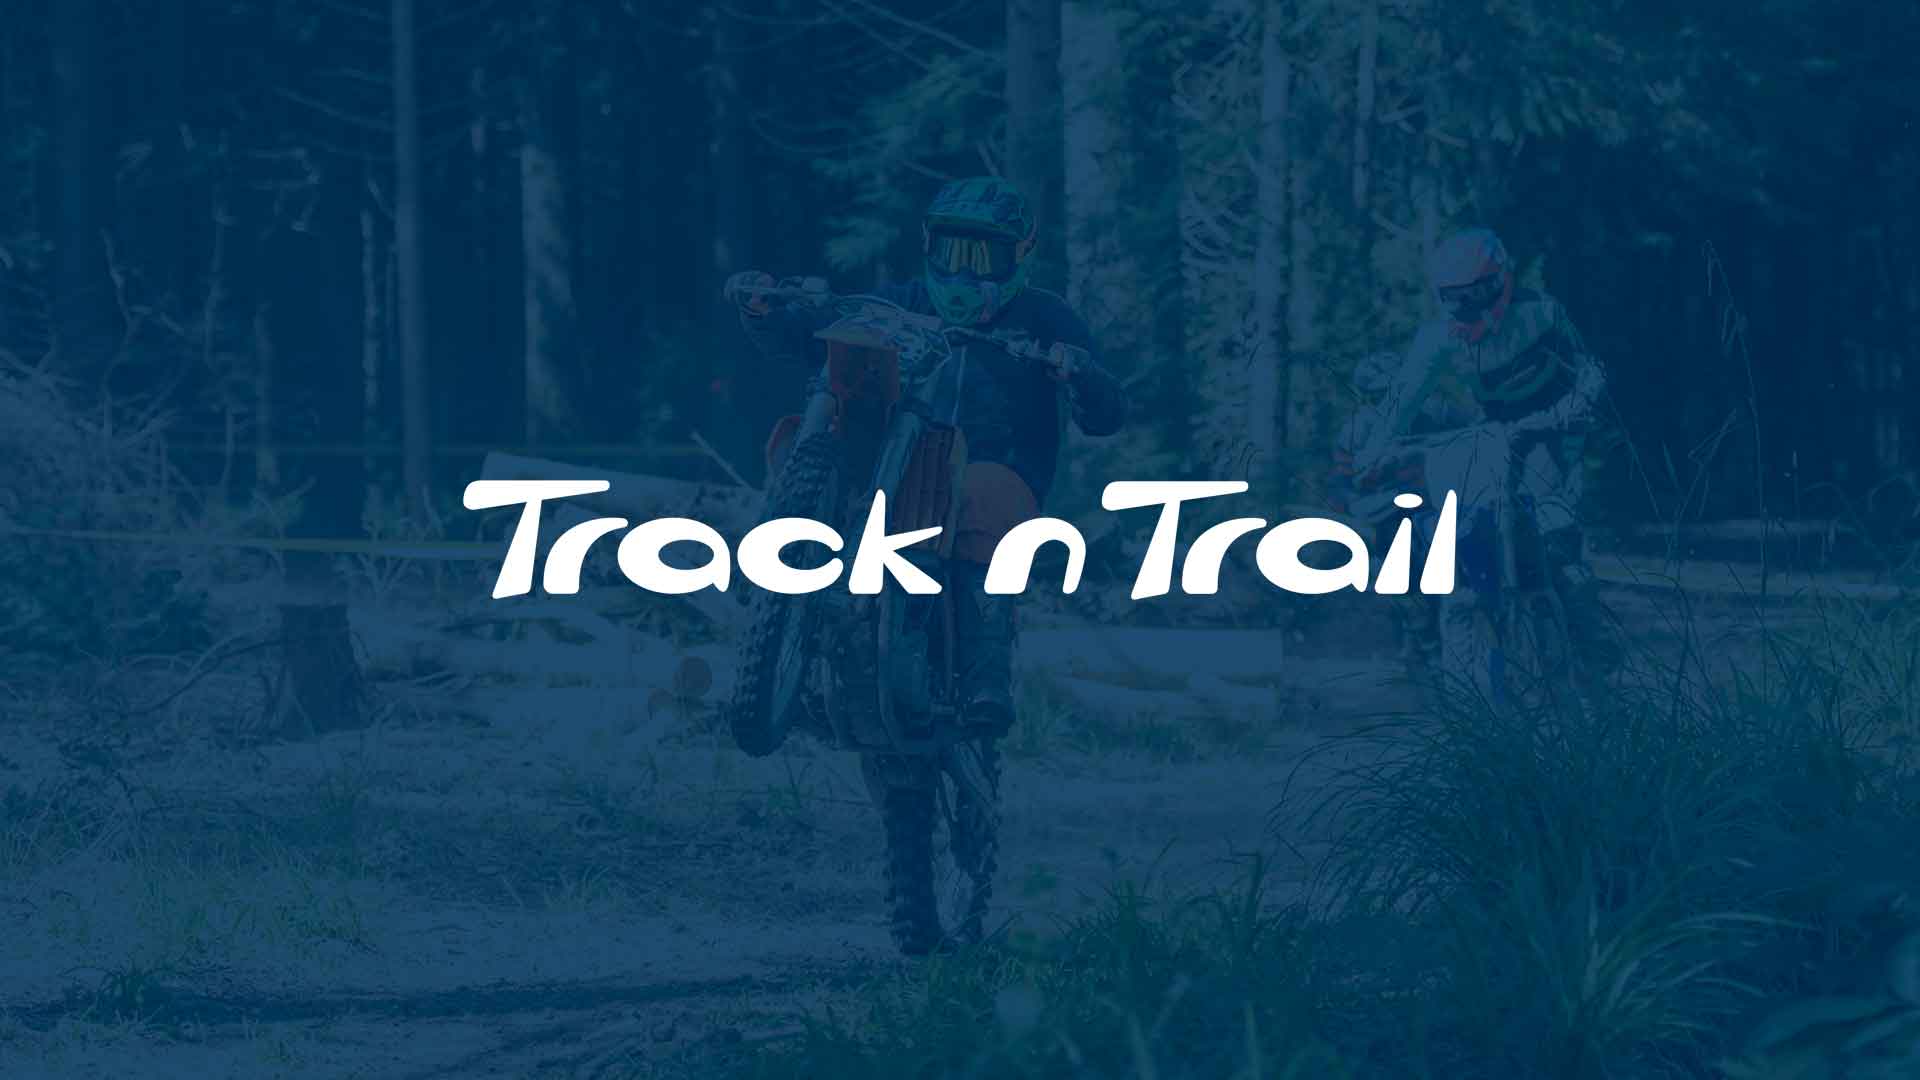 (c) Trackntrail.co.uk